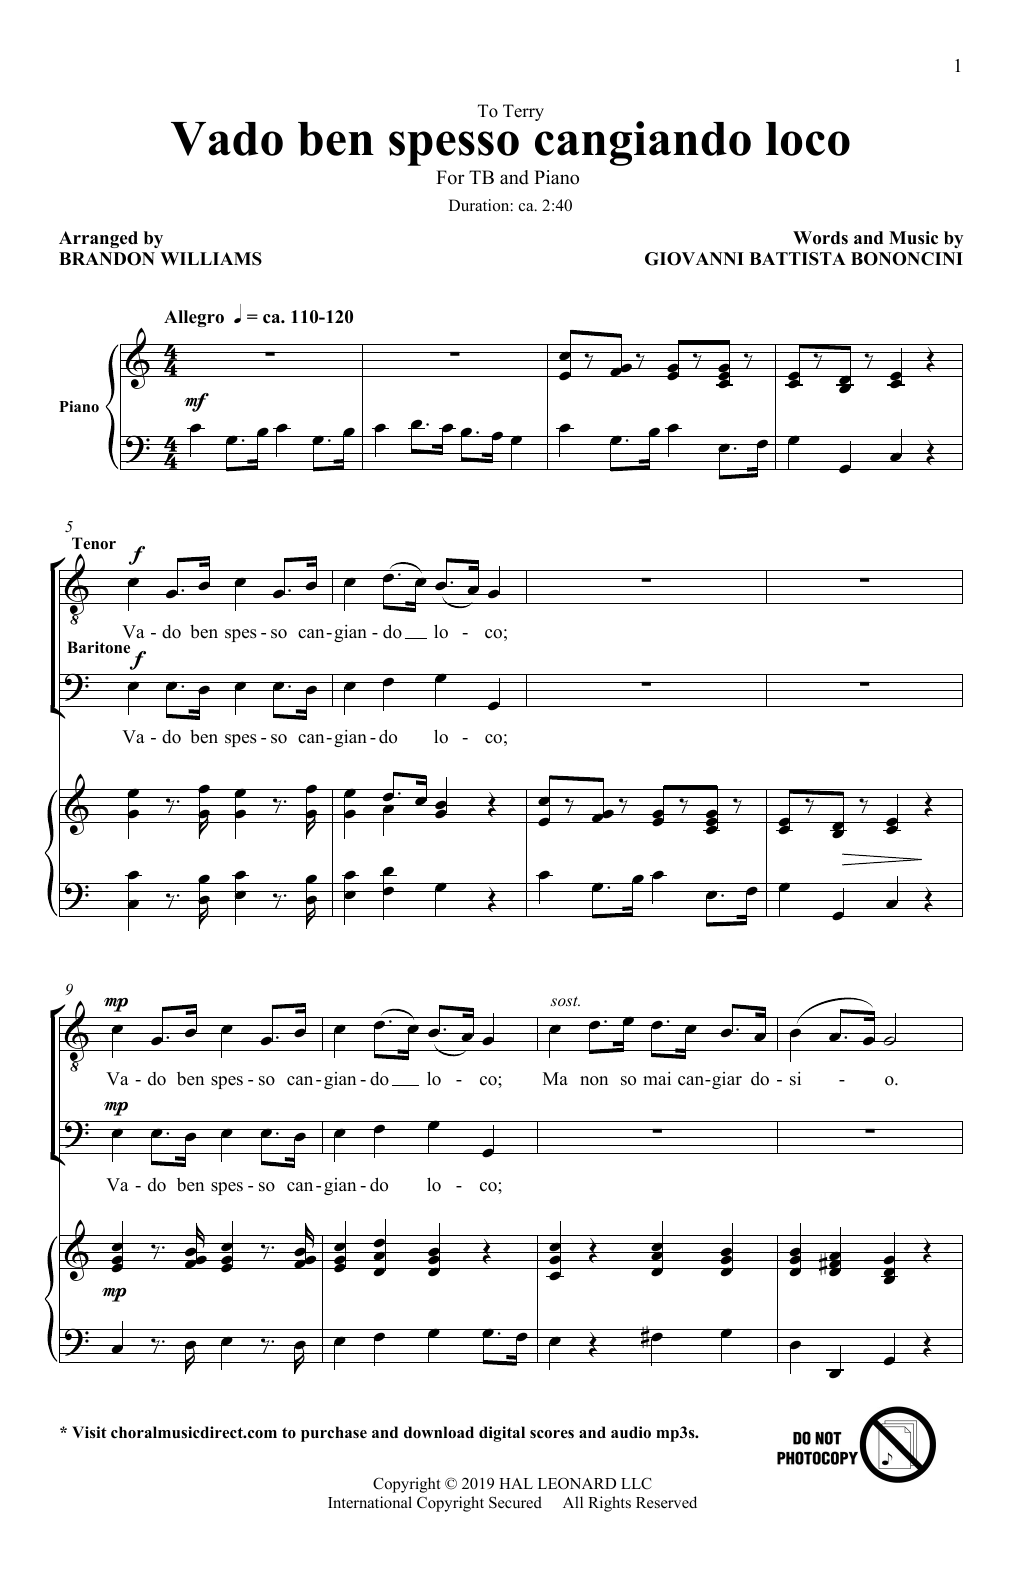 Giovanni Battista Bononcini Vado Ben Spesso Cangiando Loco (arr. Brandon Williams) Sheet Music Notes & Chords for TB Choir - Download or Print PDF